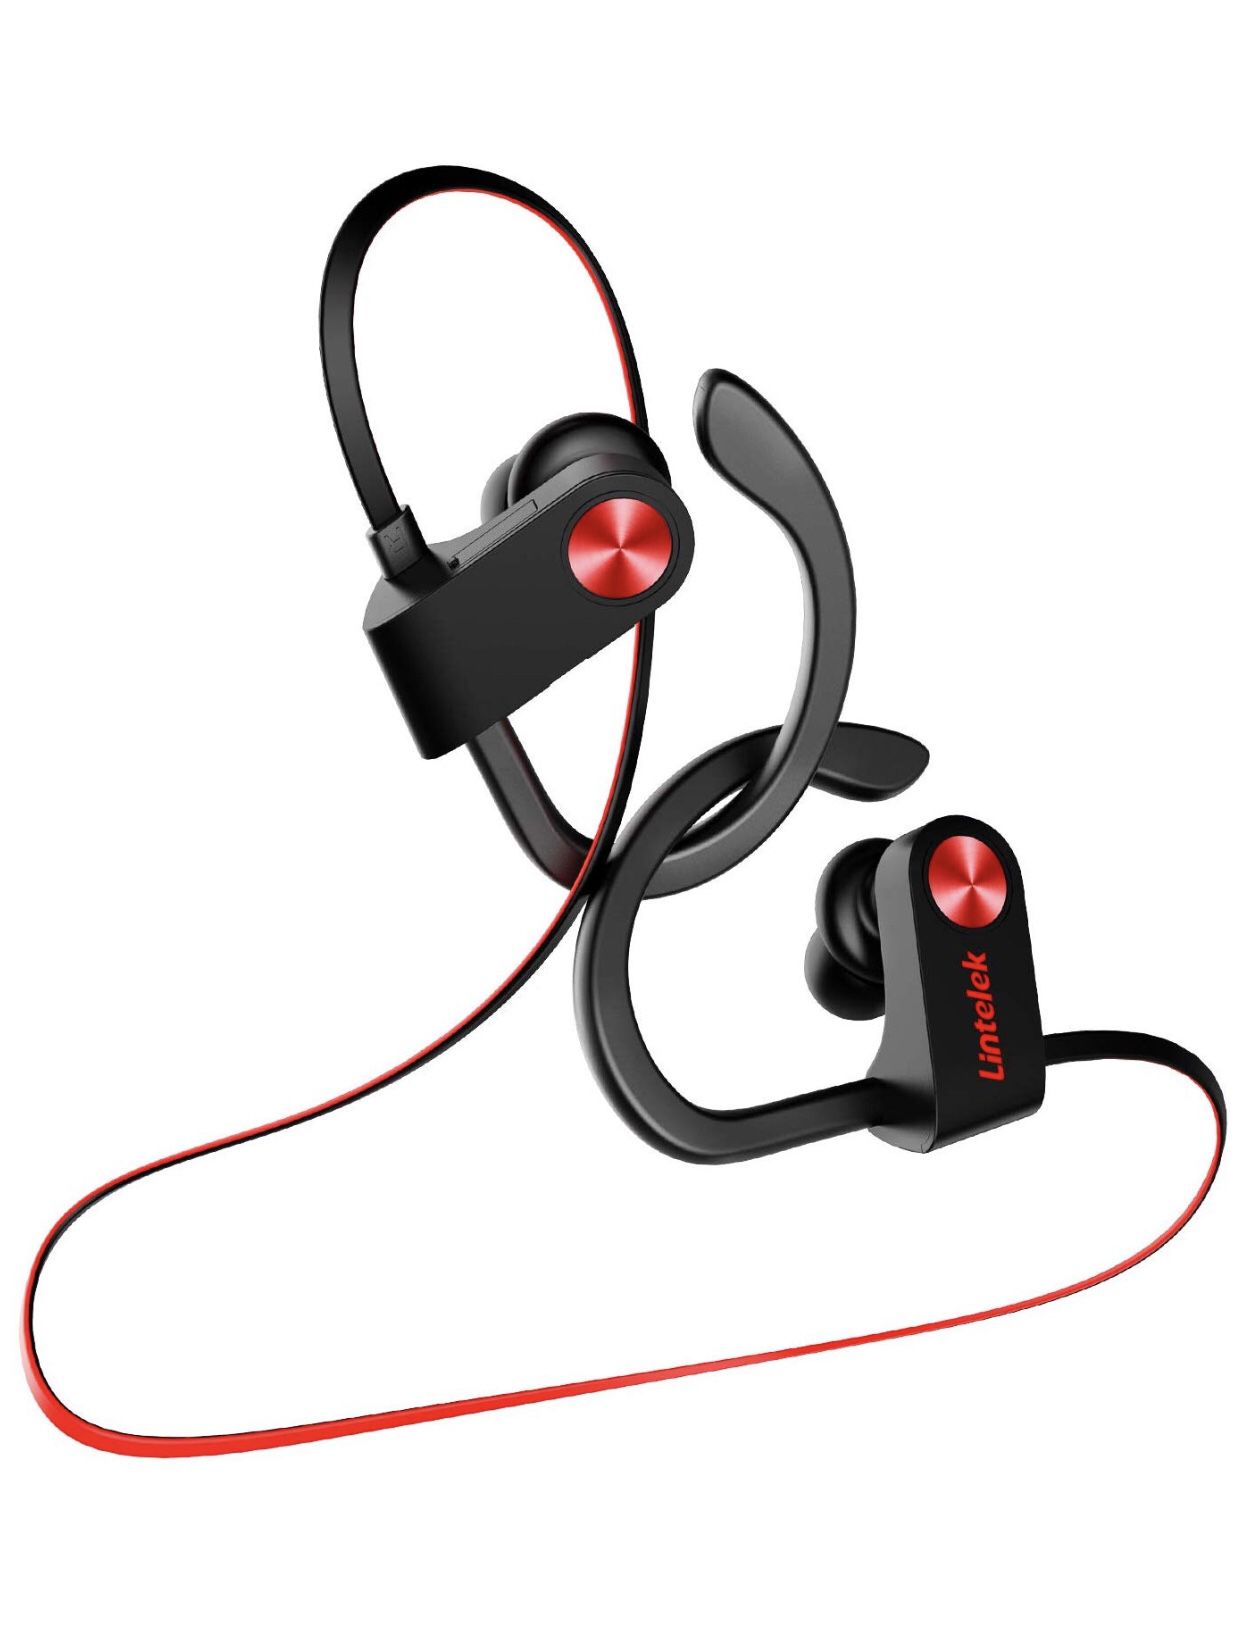 Wireless Headphones IPX7 Waterproof, Sport Earphones Stereo Sound Deep Bass, Noise Canceling, Built-in Mic,Lightweight in-Ear Headset for Running Gym